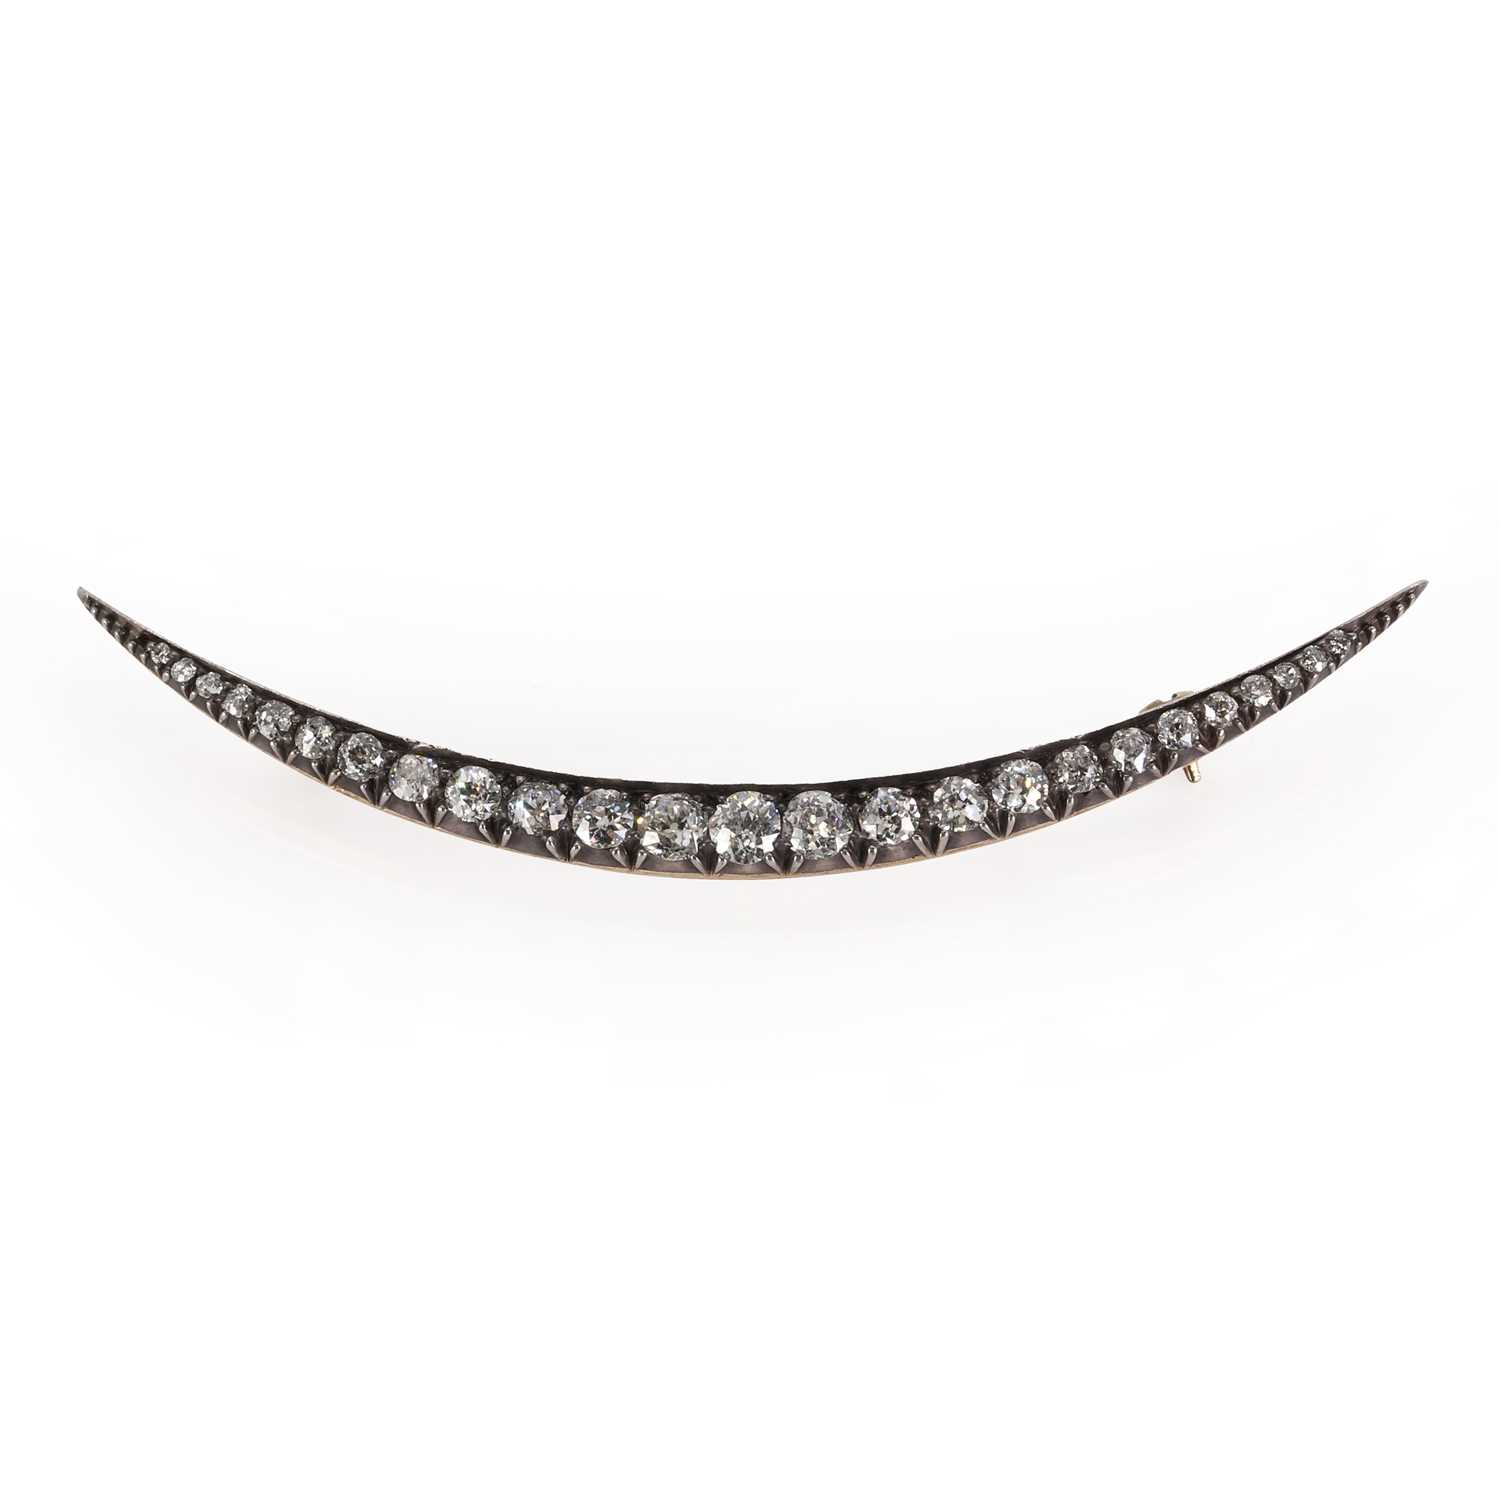 A Victorian diamond crescent brooch,